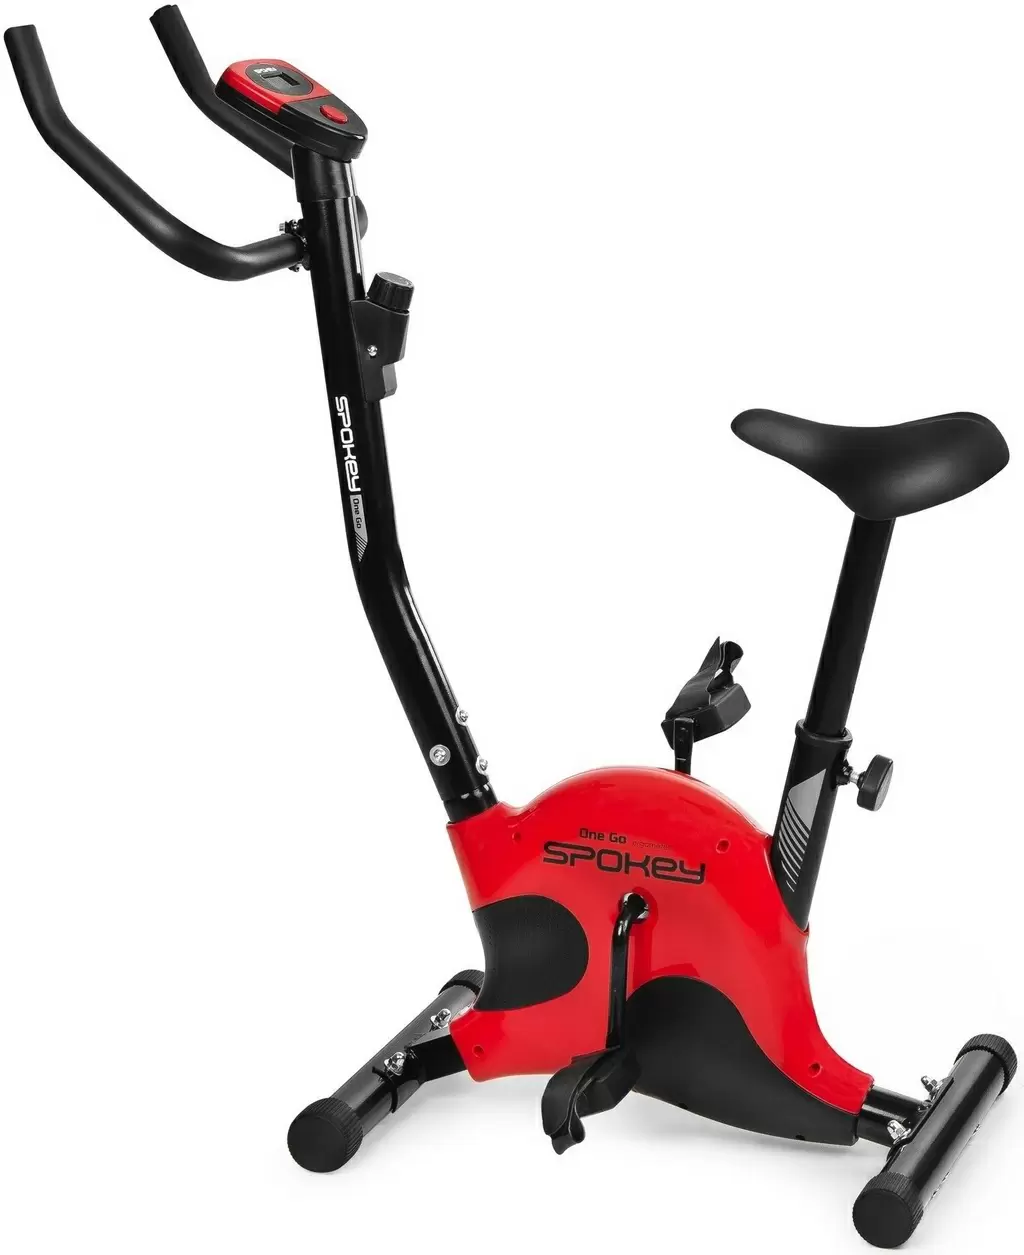 Bicicletă fitness Spokey Onego, roșu/negru